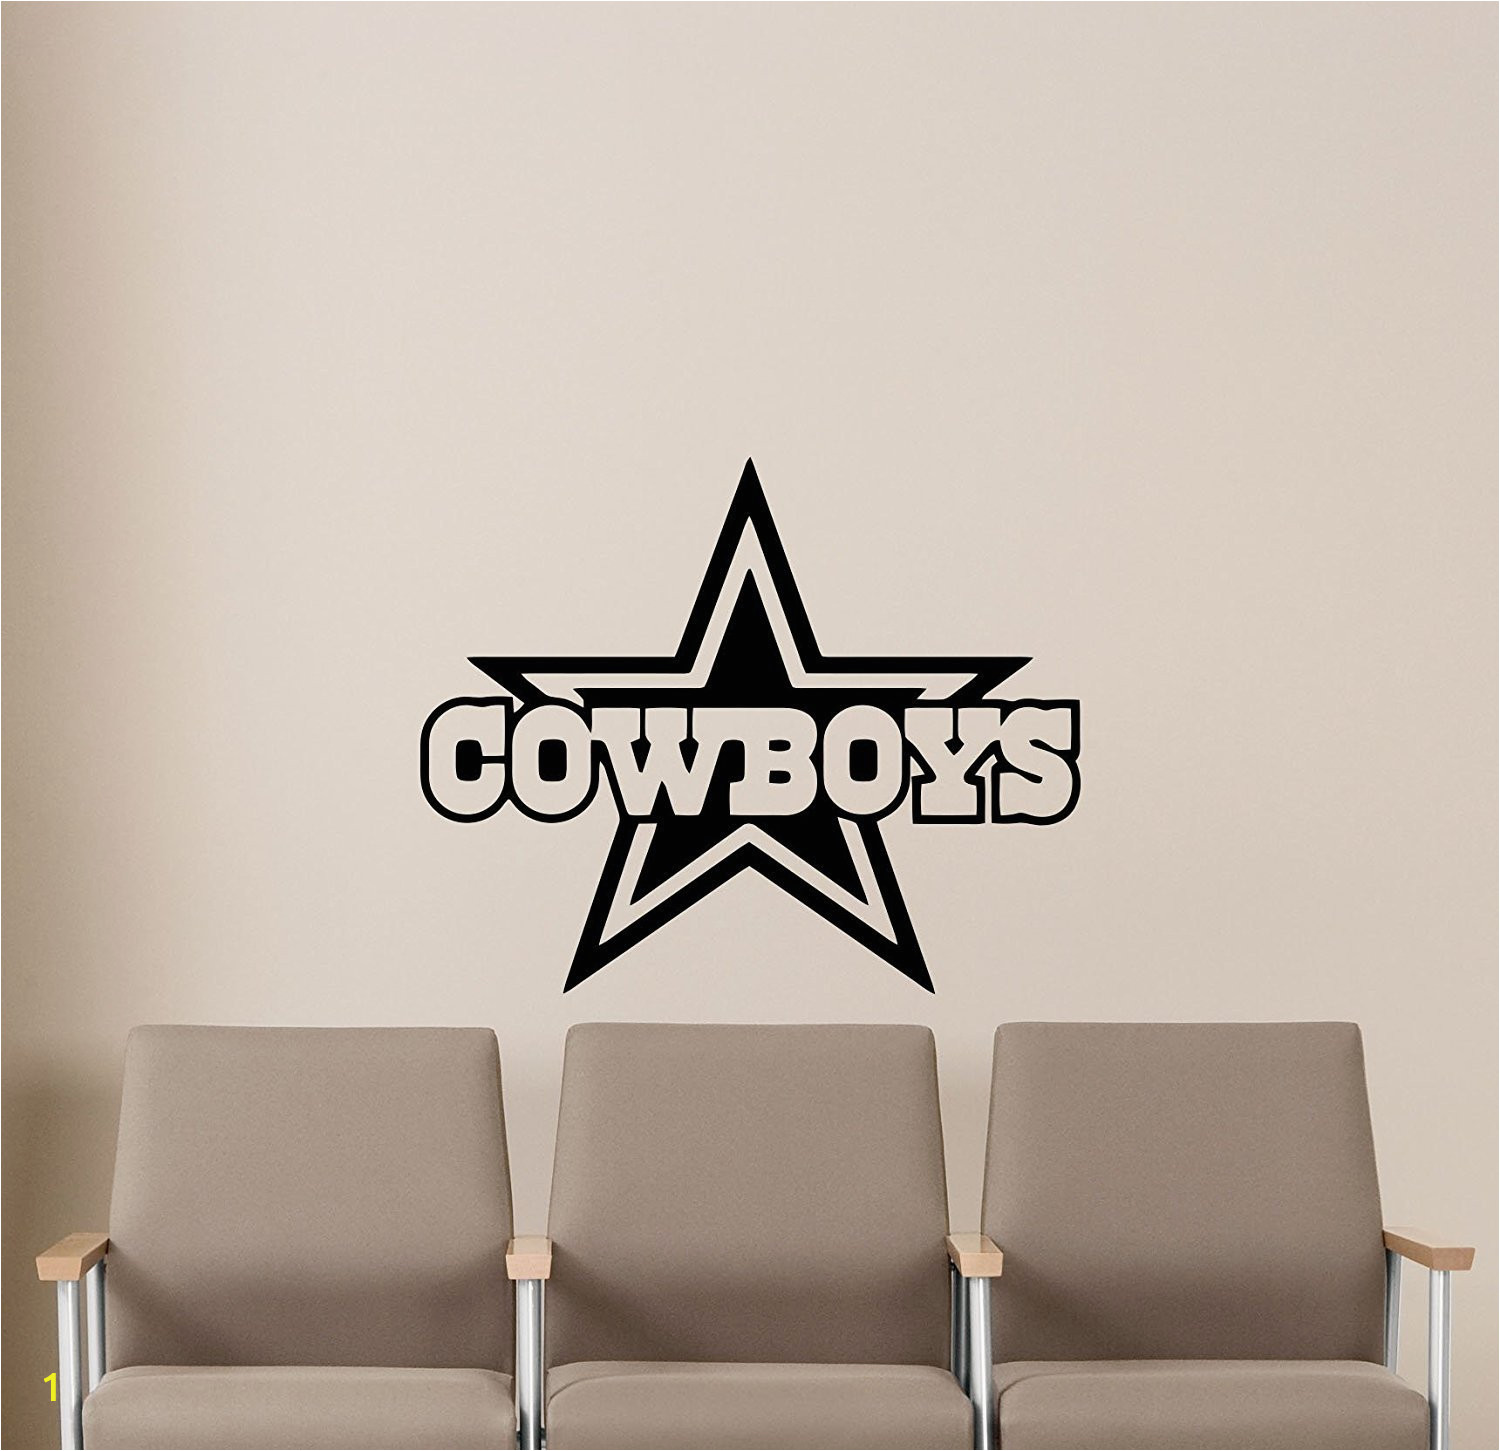 Football Wall Mural Wallpaper Amazon Ncaa Dallas Cowboys Wall Decals Sports Football